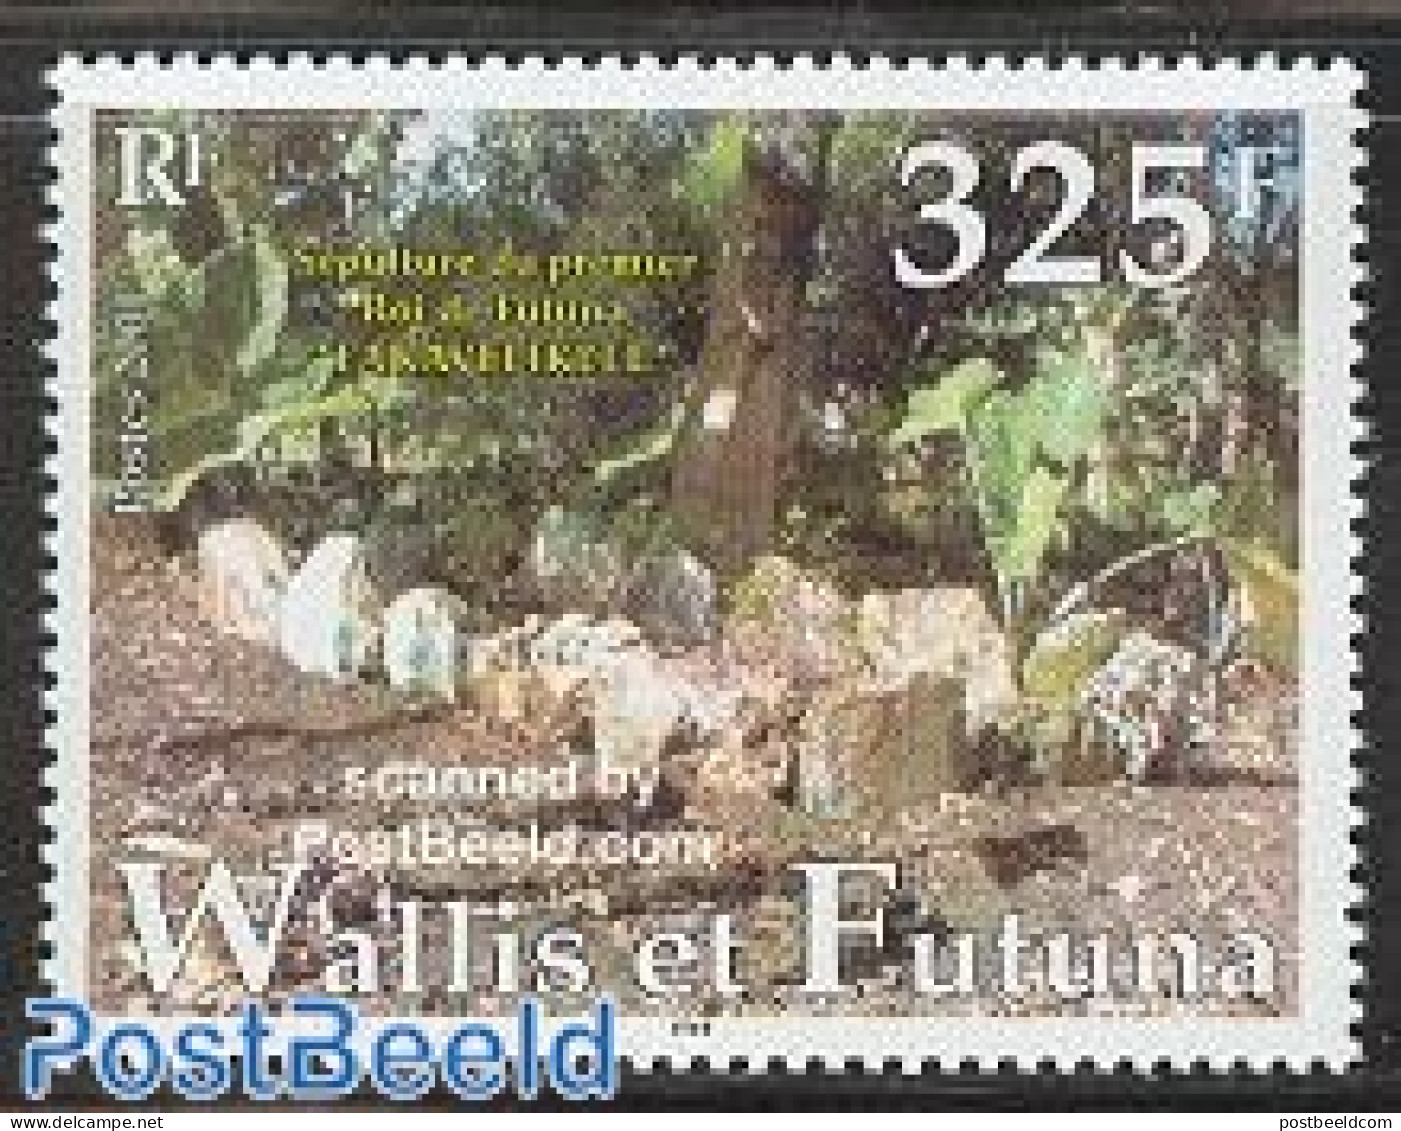 Wallis & Futuna 2001 Fakavelikele Tomb 1v, Mint NH, History - Kings & Queens (Royalty) - Koniklijke Families